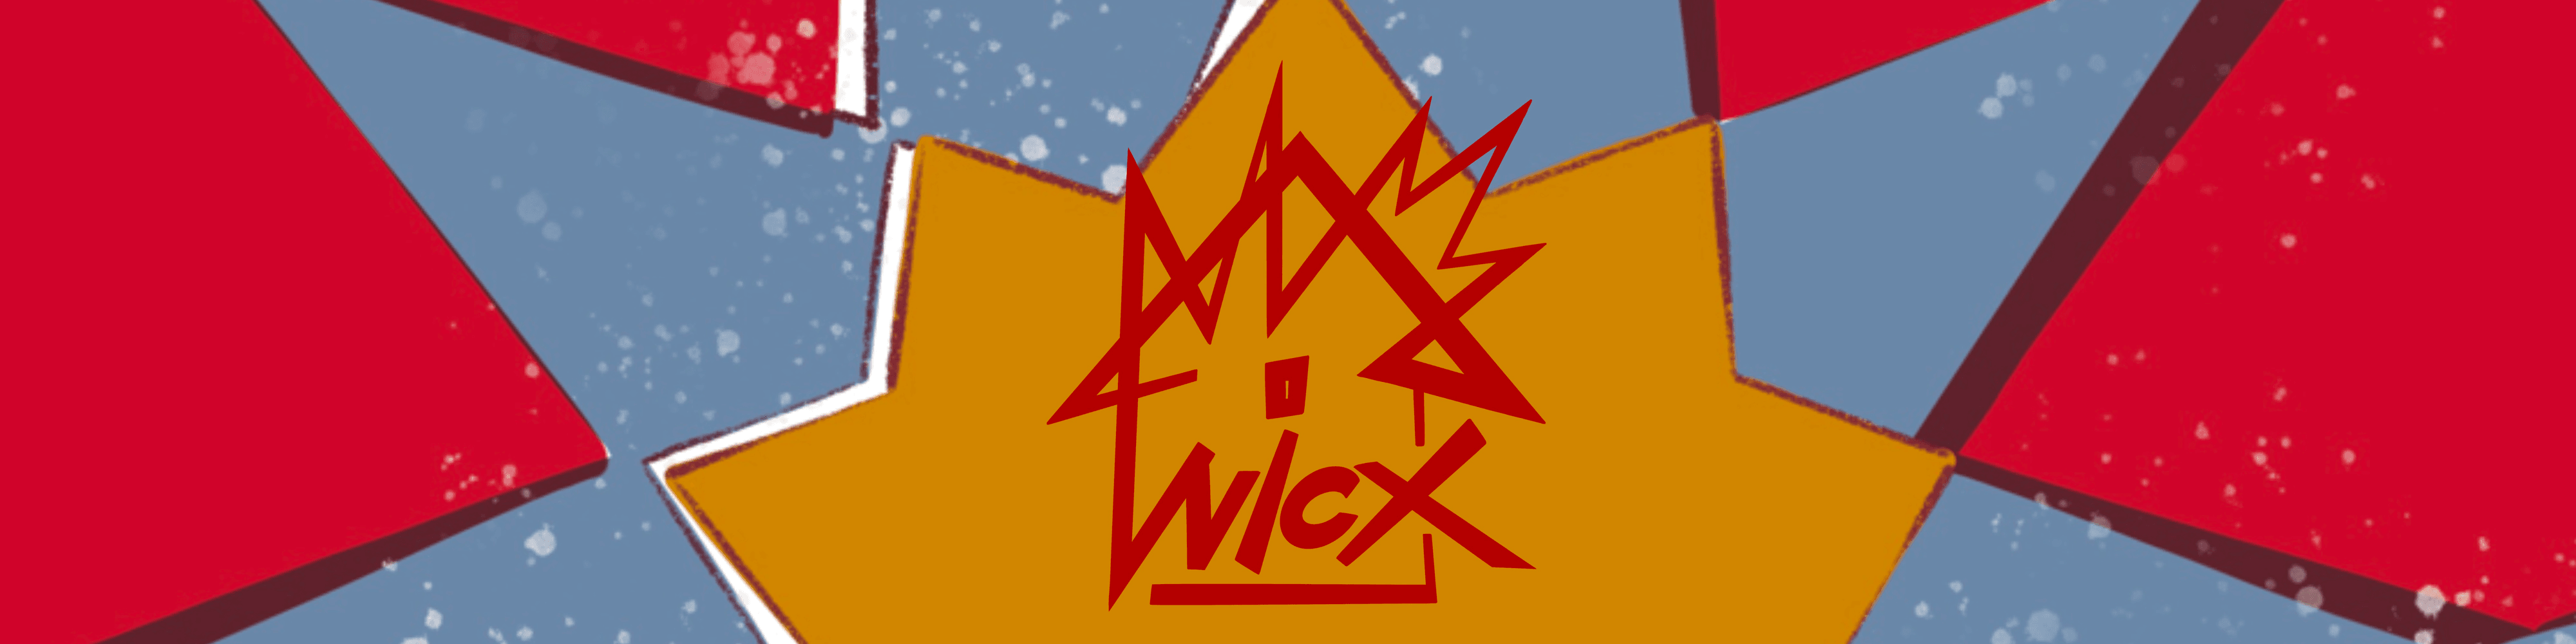 wicx banner